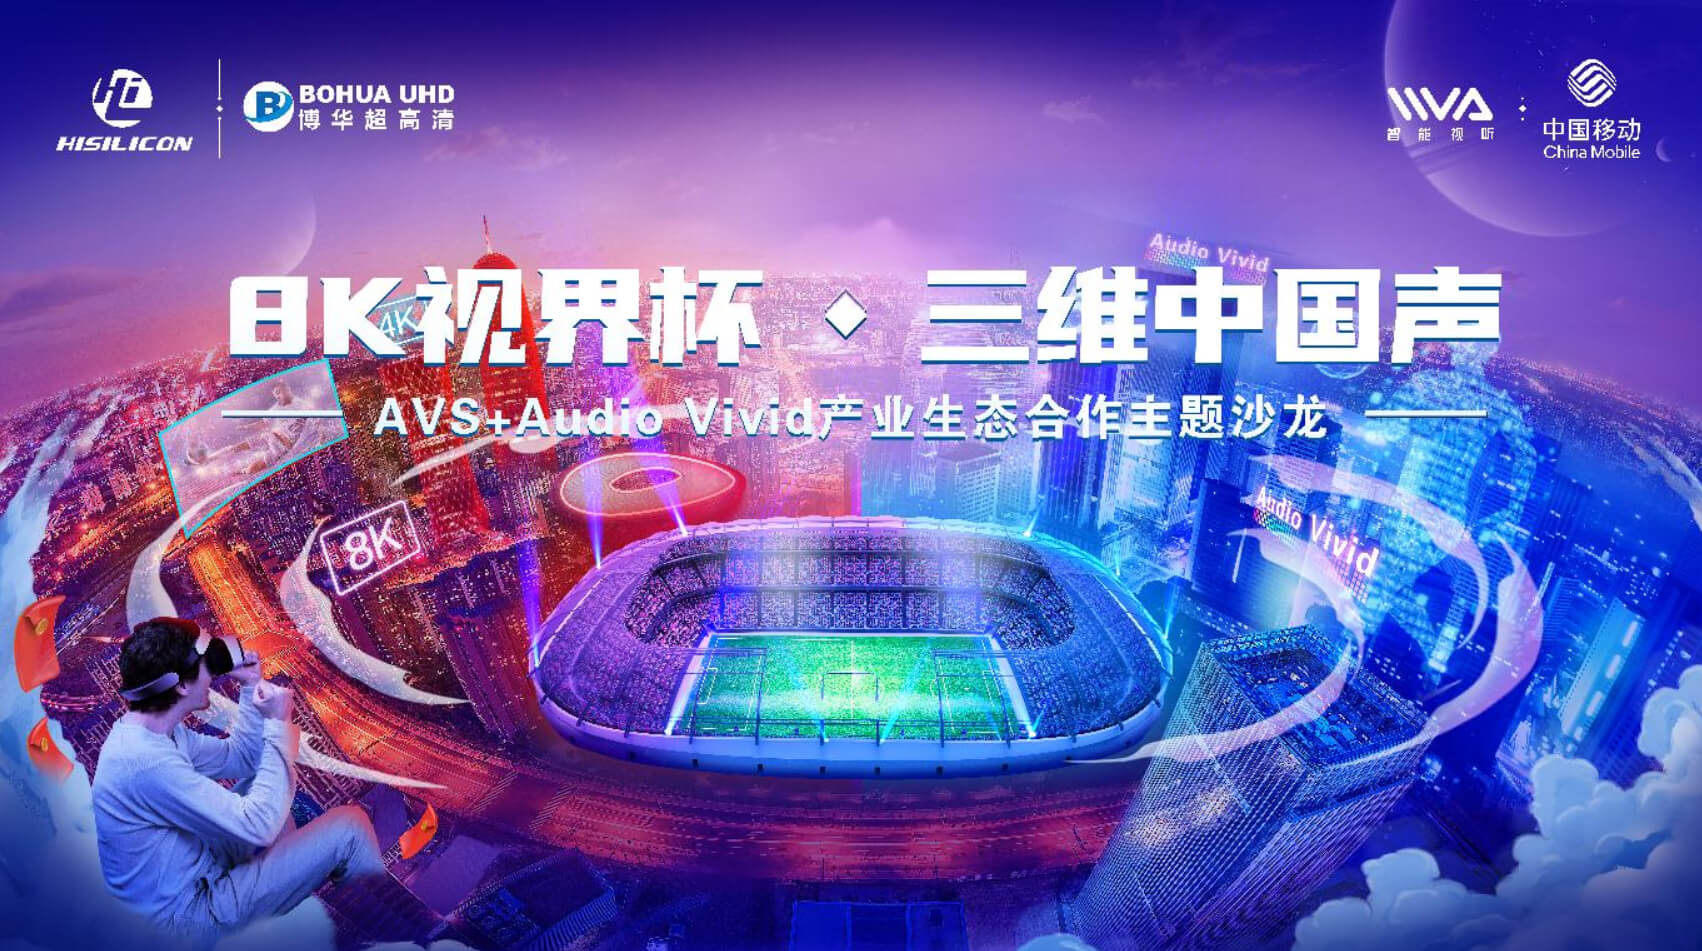 “8K 视界杯·三维中国声”AVS+Audio Vivid产业生态合作主题沙龙